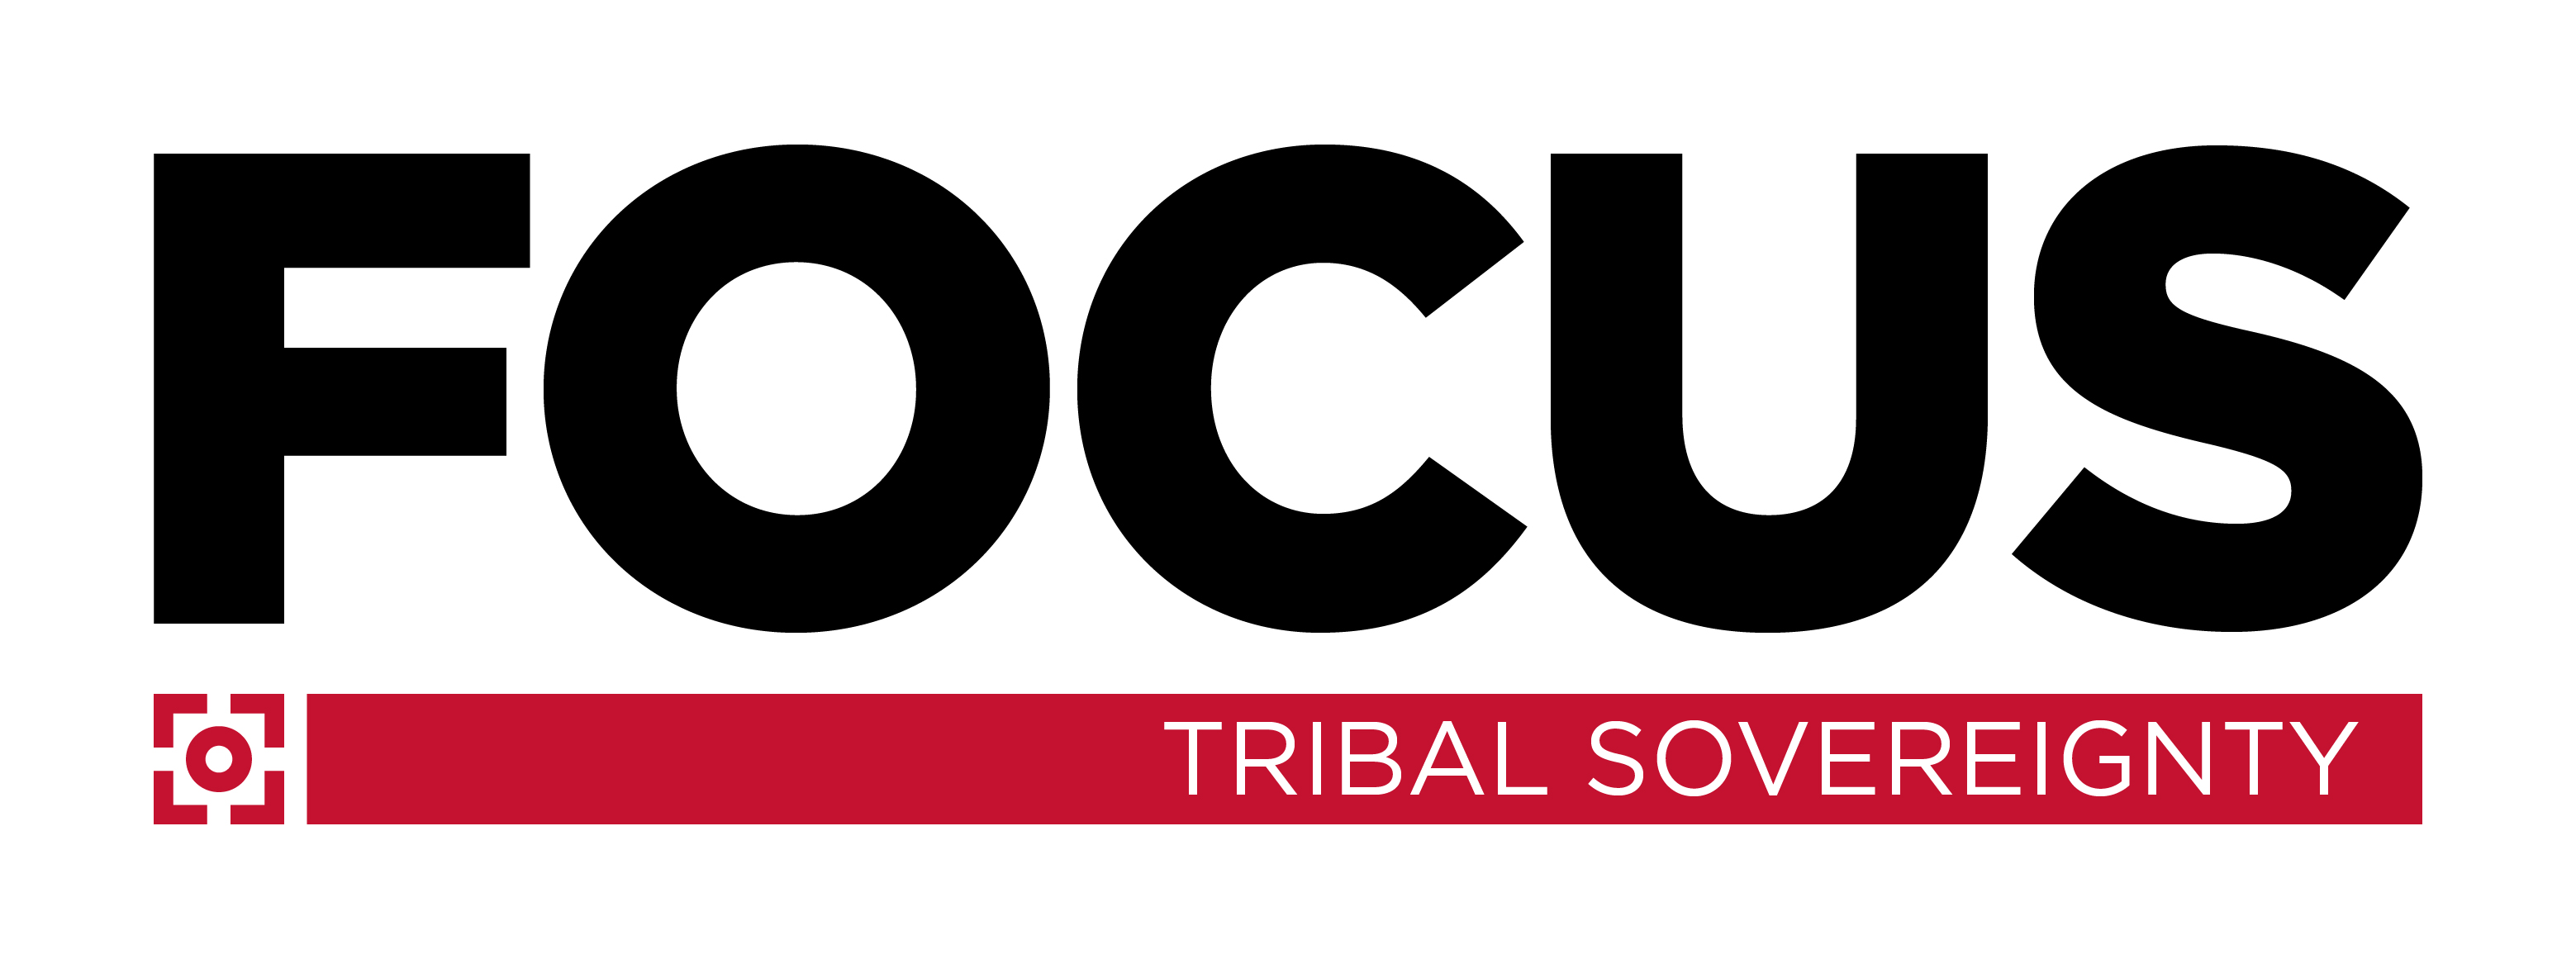 focus tribal sovereignty